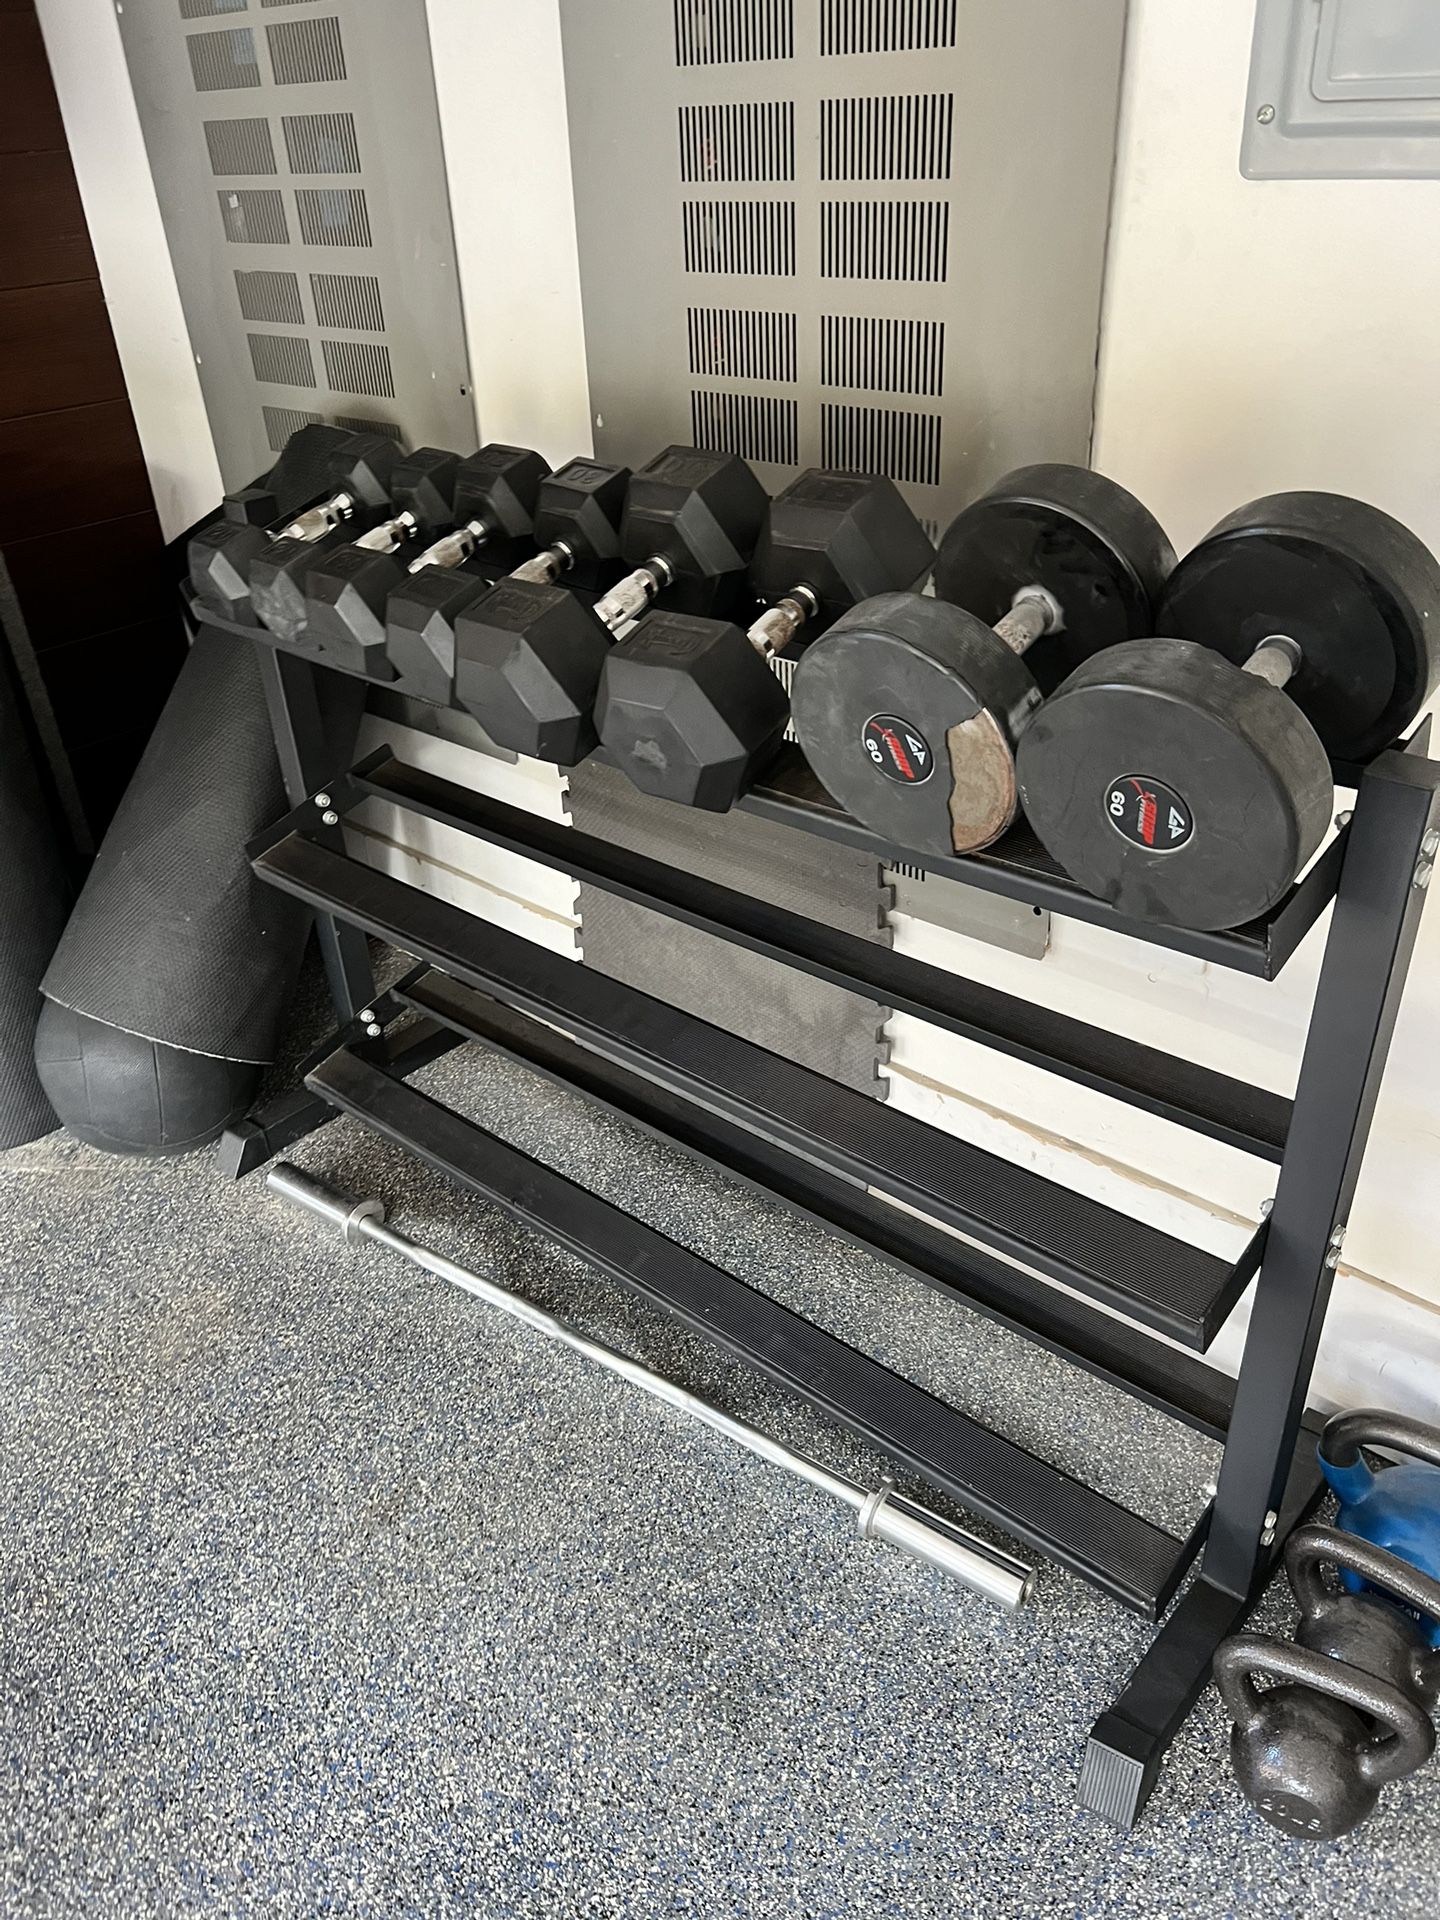 Gym / Fitness Equipment 